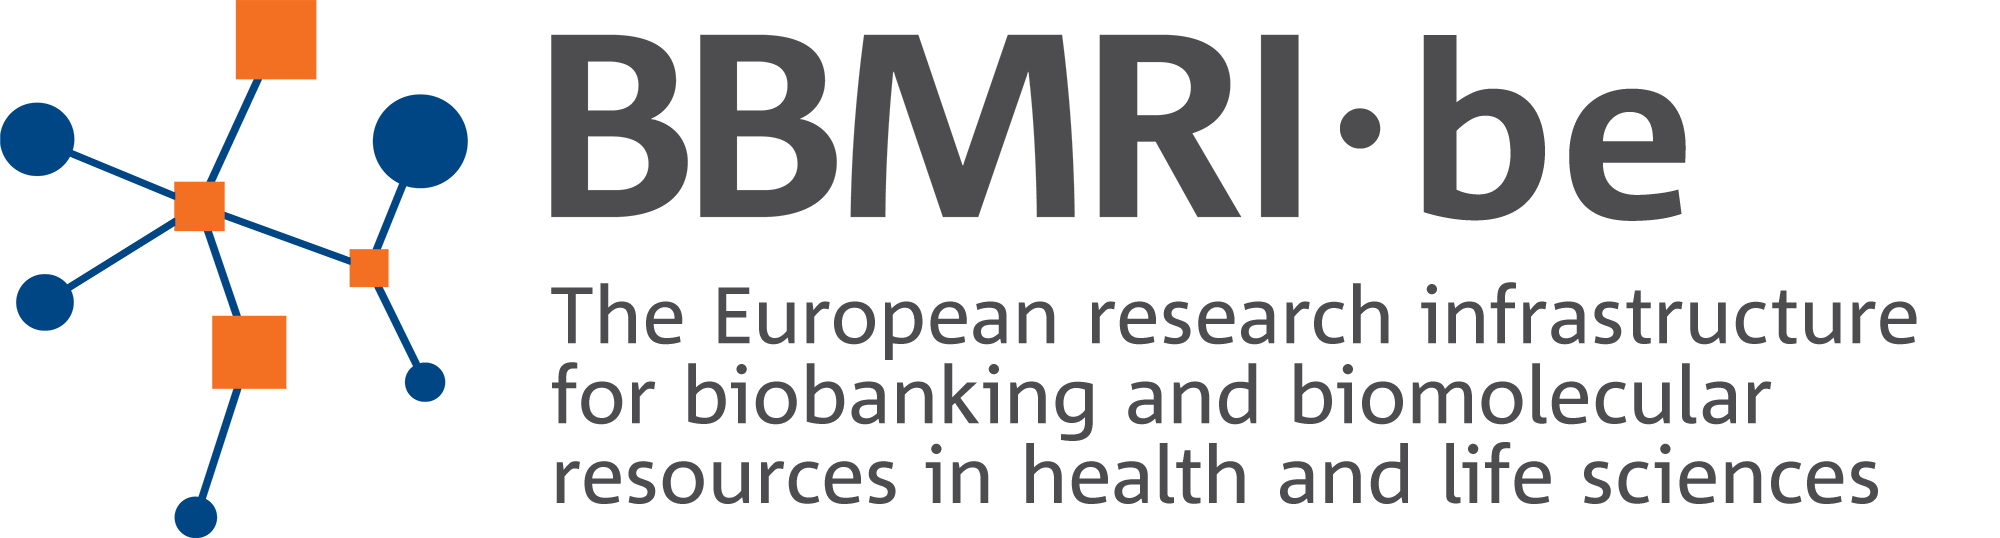 the bbmri-eric be logo